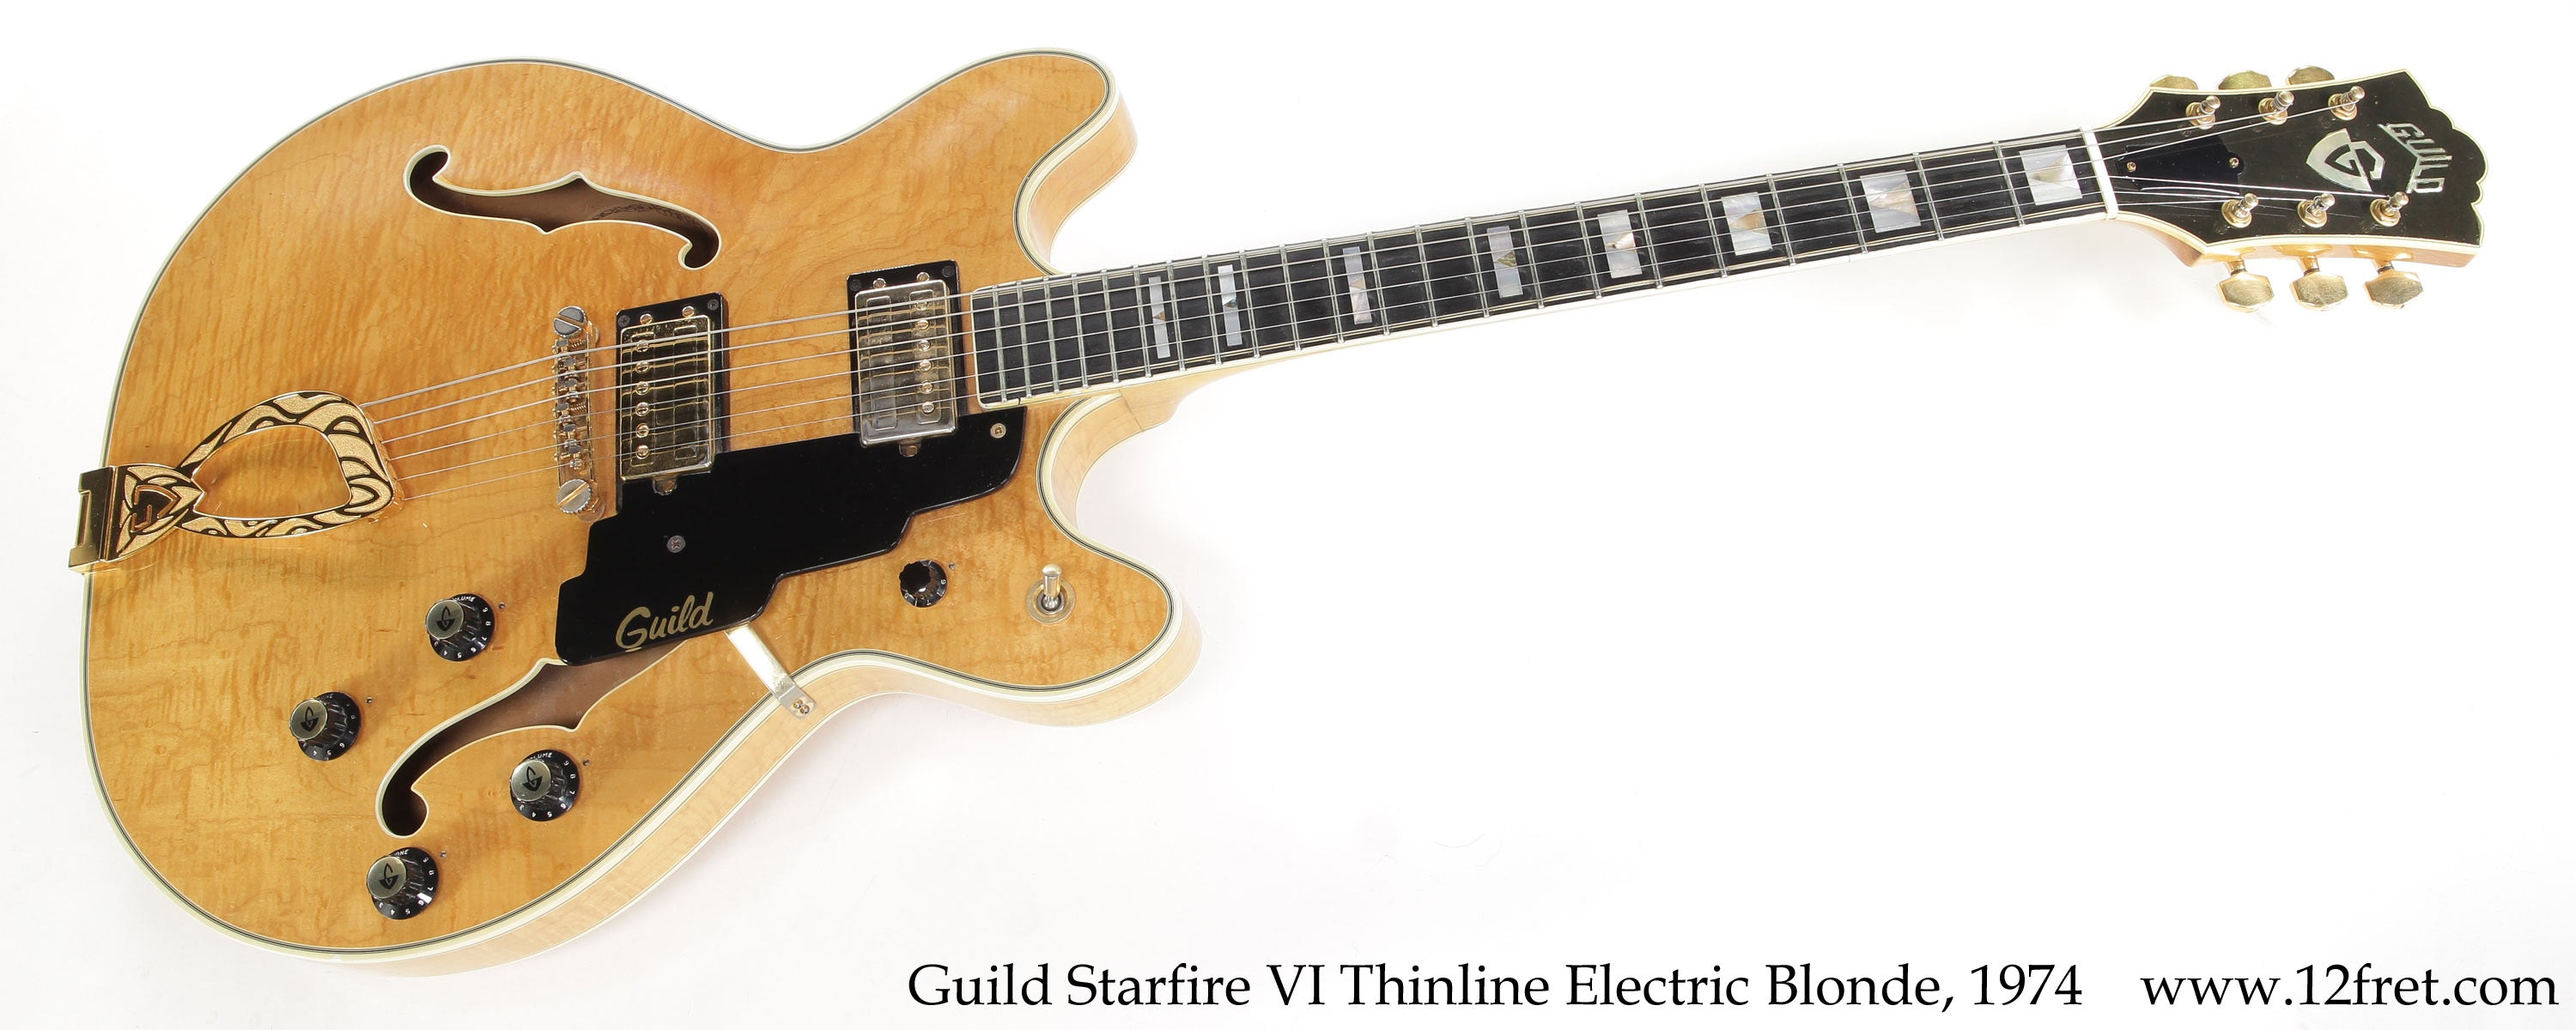 Guild Starfire VI Thinline Electric Blonde, 1974 